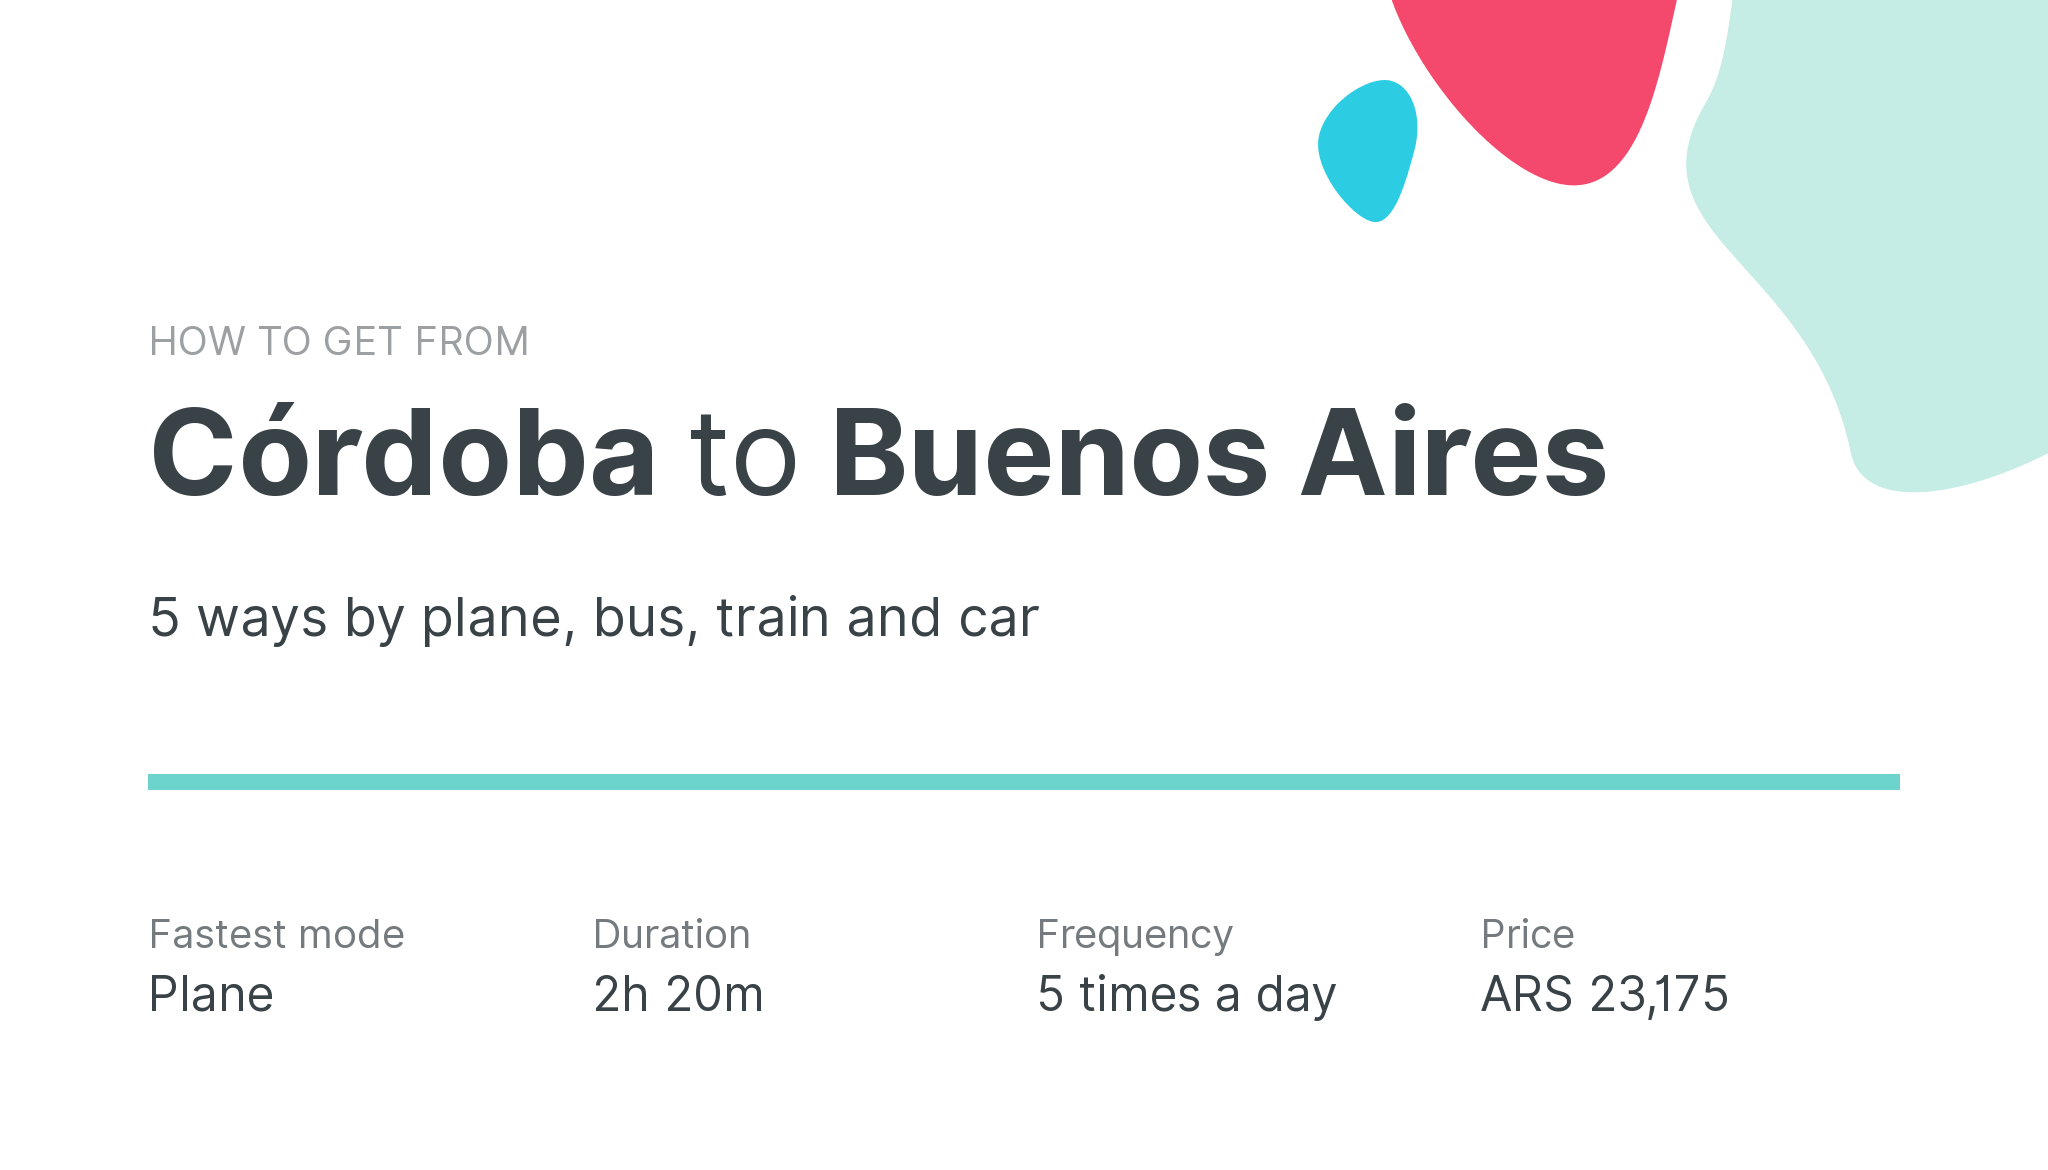 How do I get from Córdoba to Buenos Aires